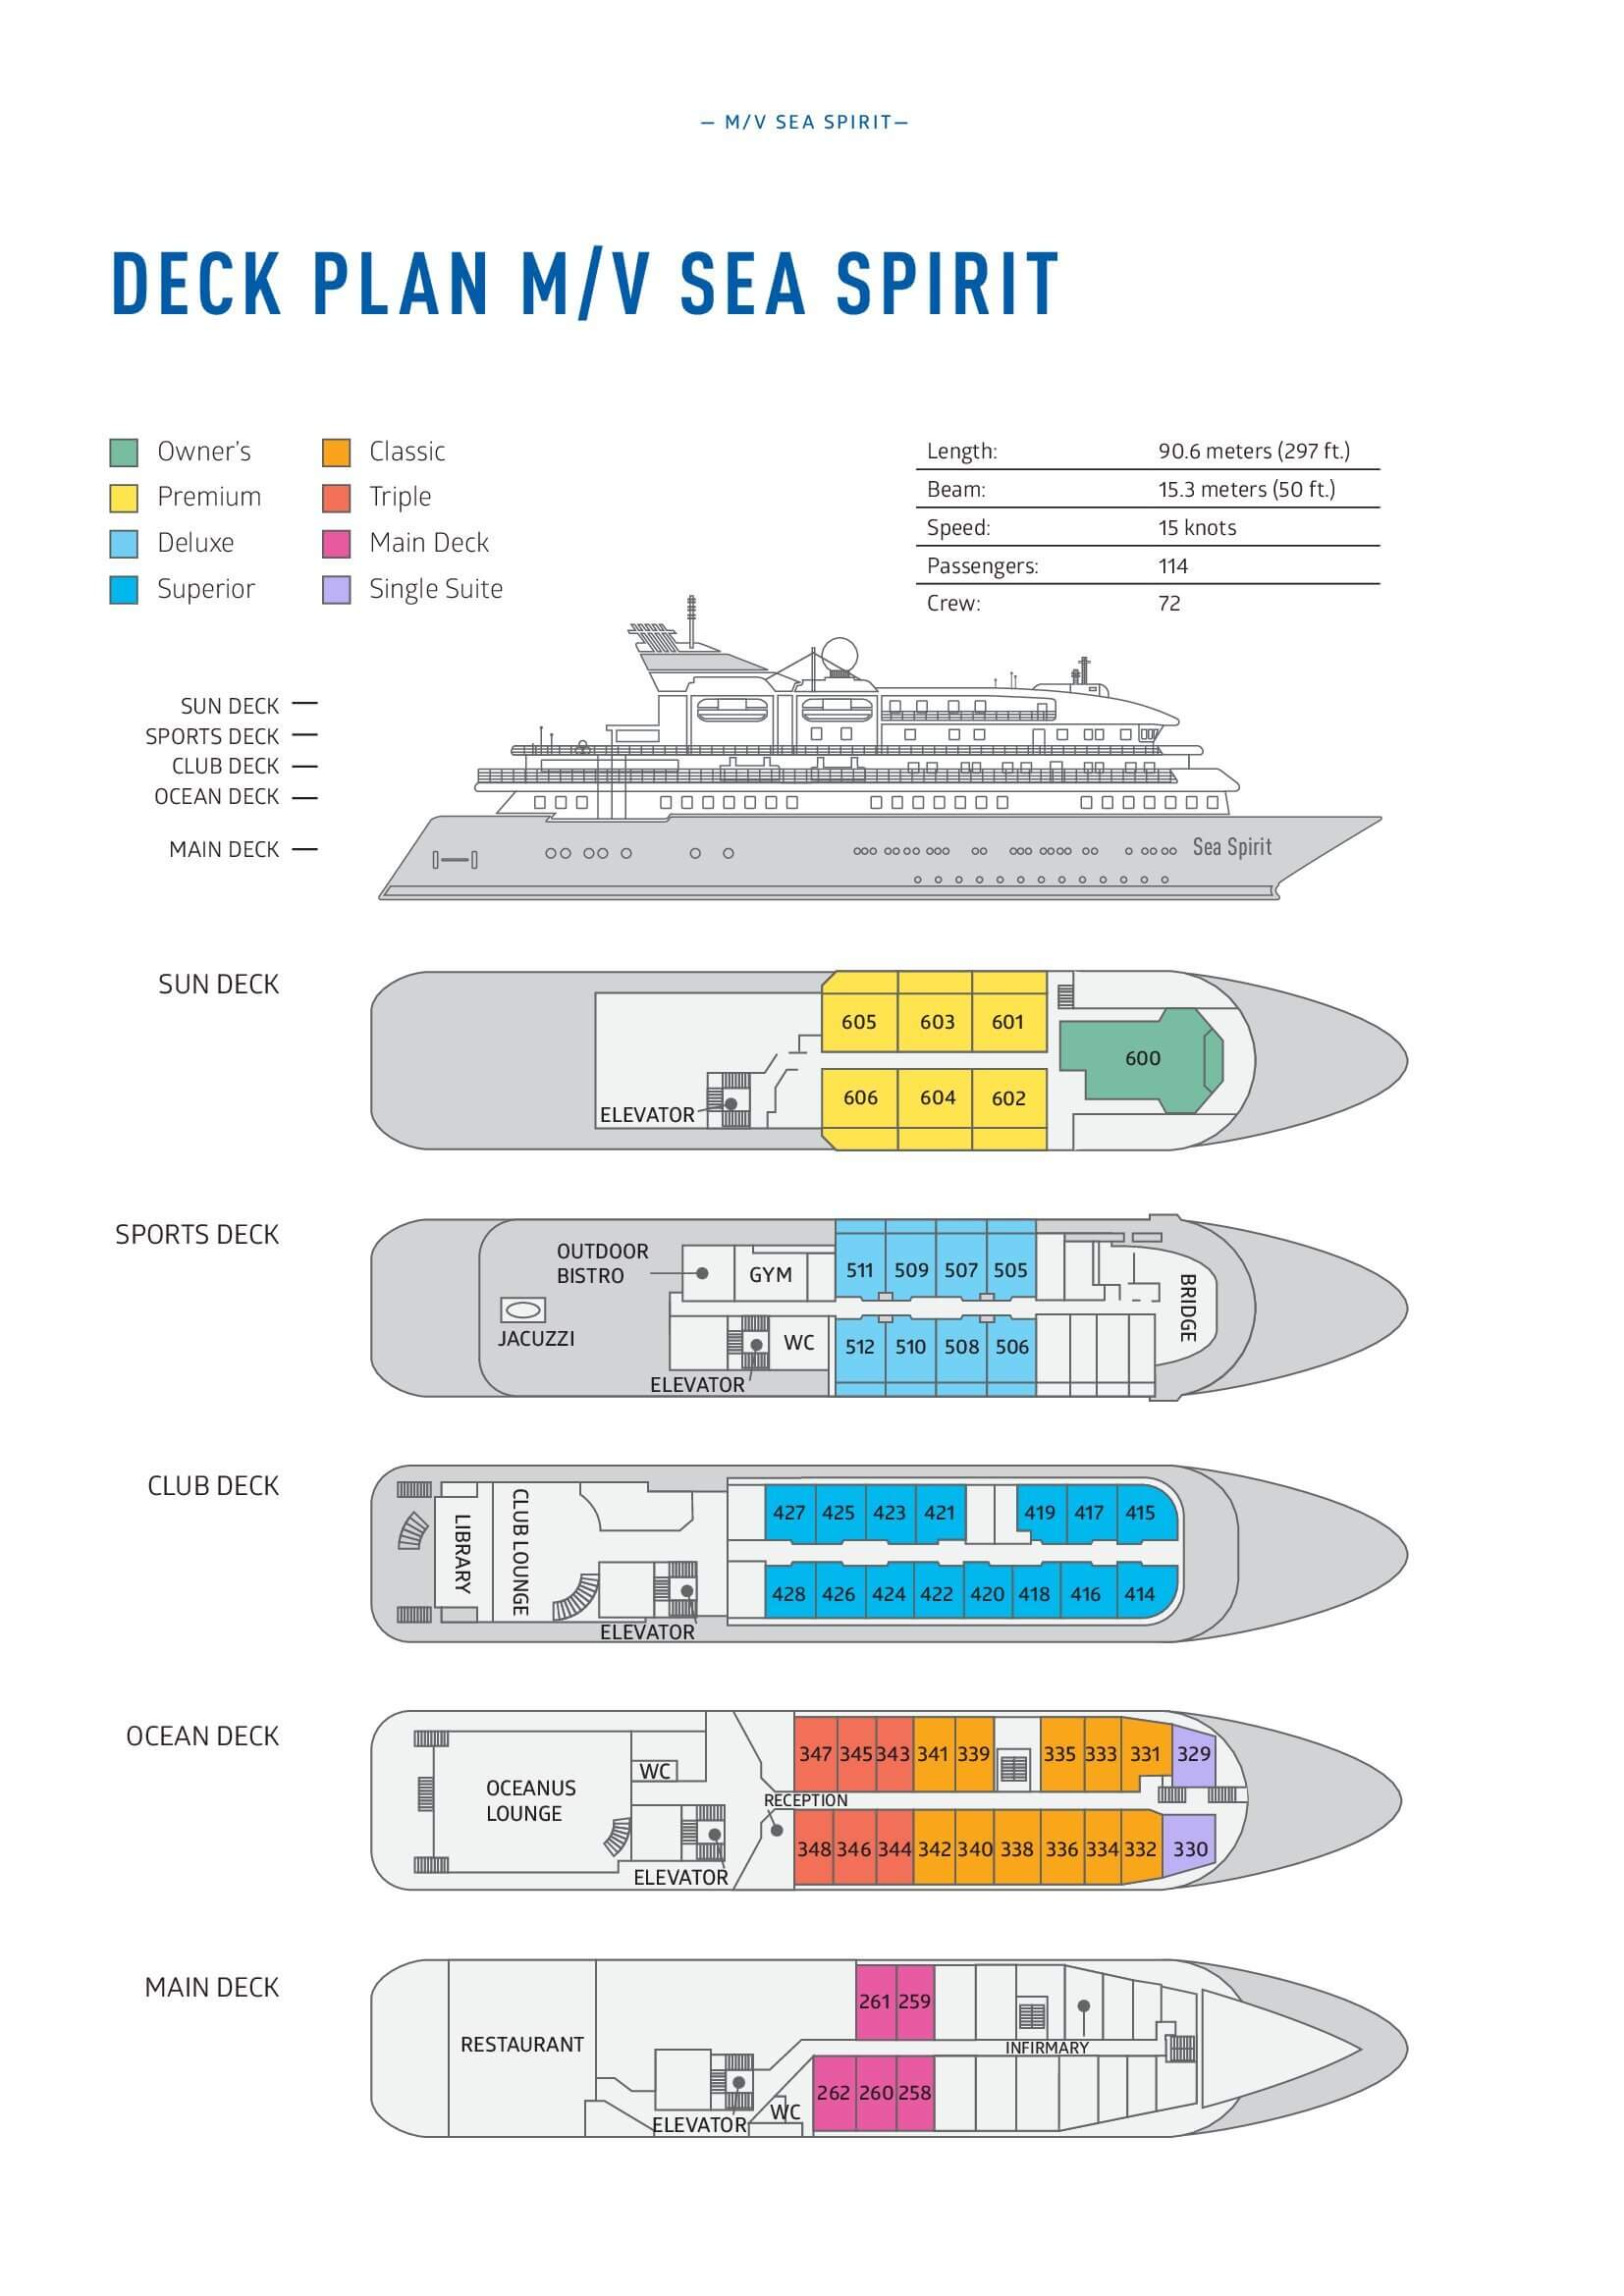 Deck plan detailing Main Deck, Ocean Deck, Club Deck, Sports Deck and Sun Deck of M/V Sea Spirit expedition ship.